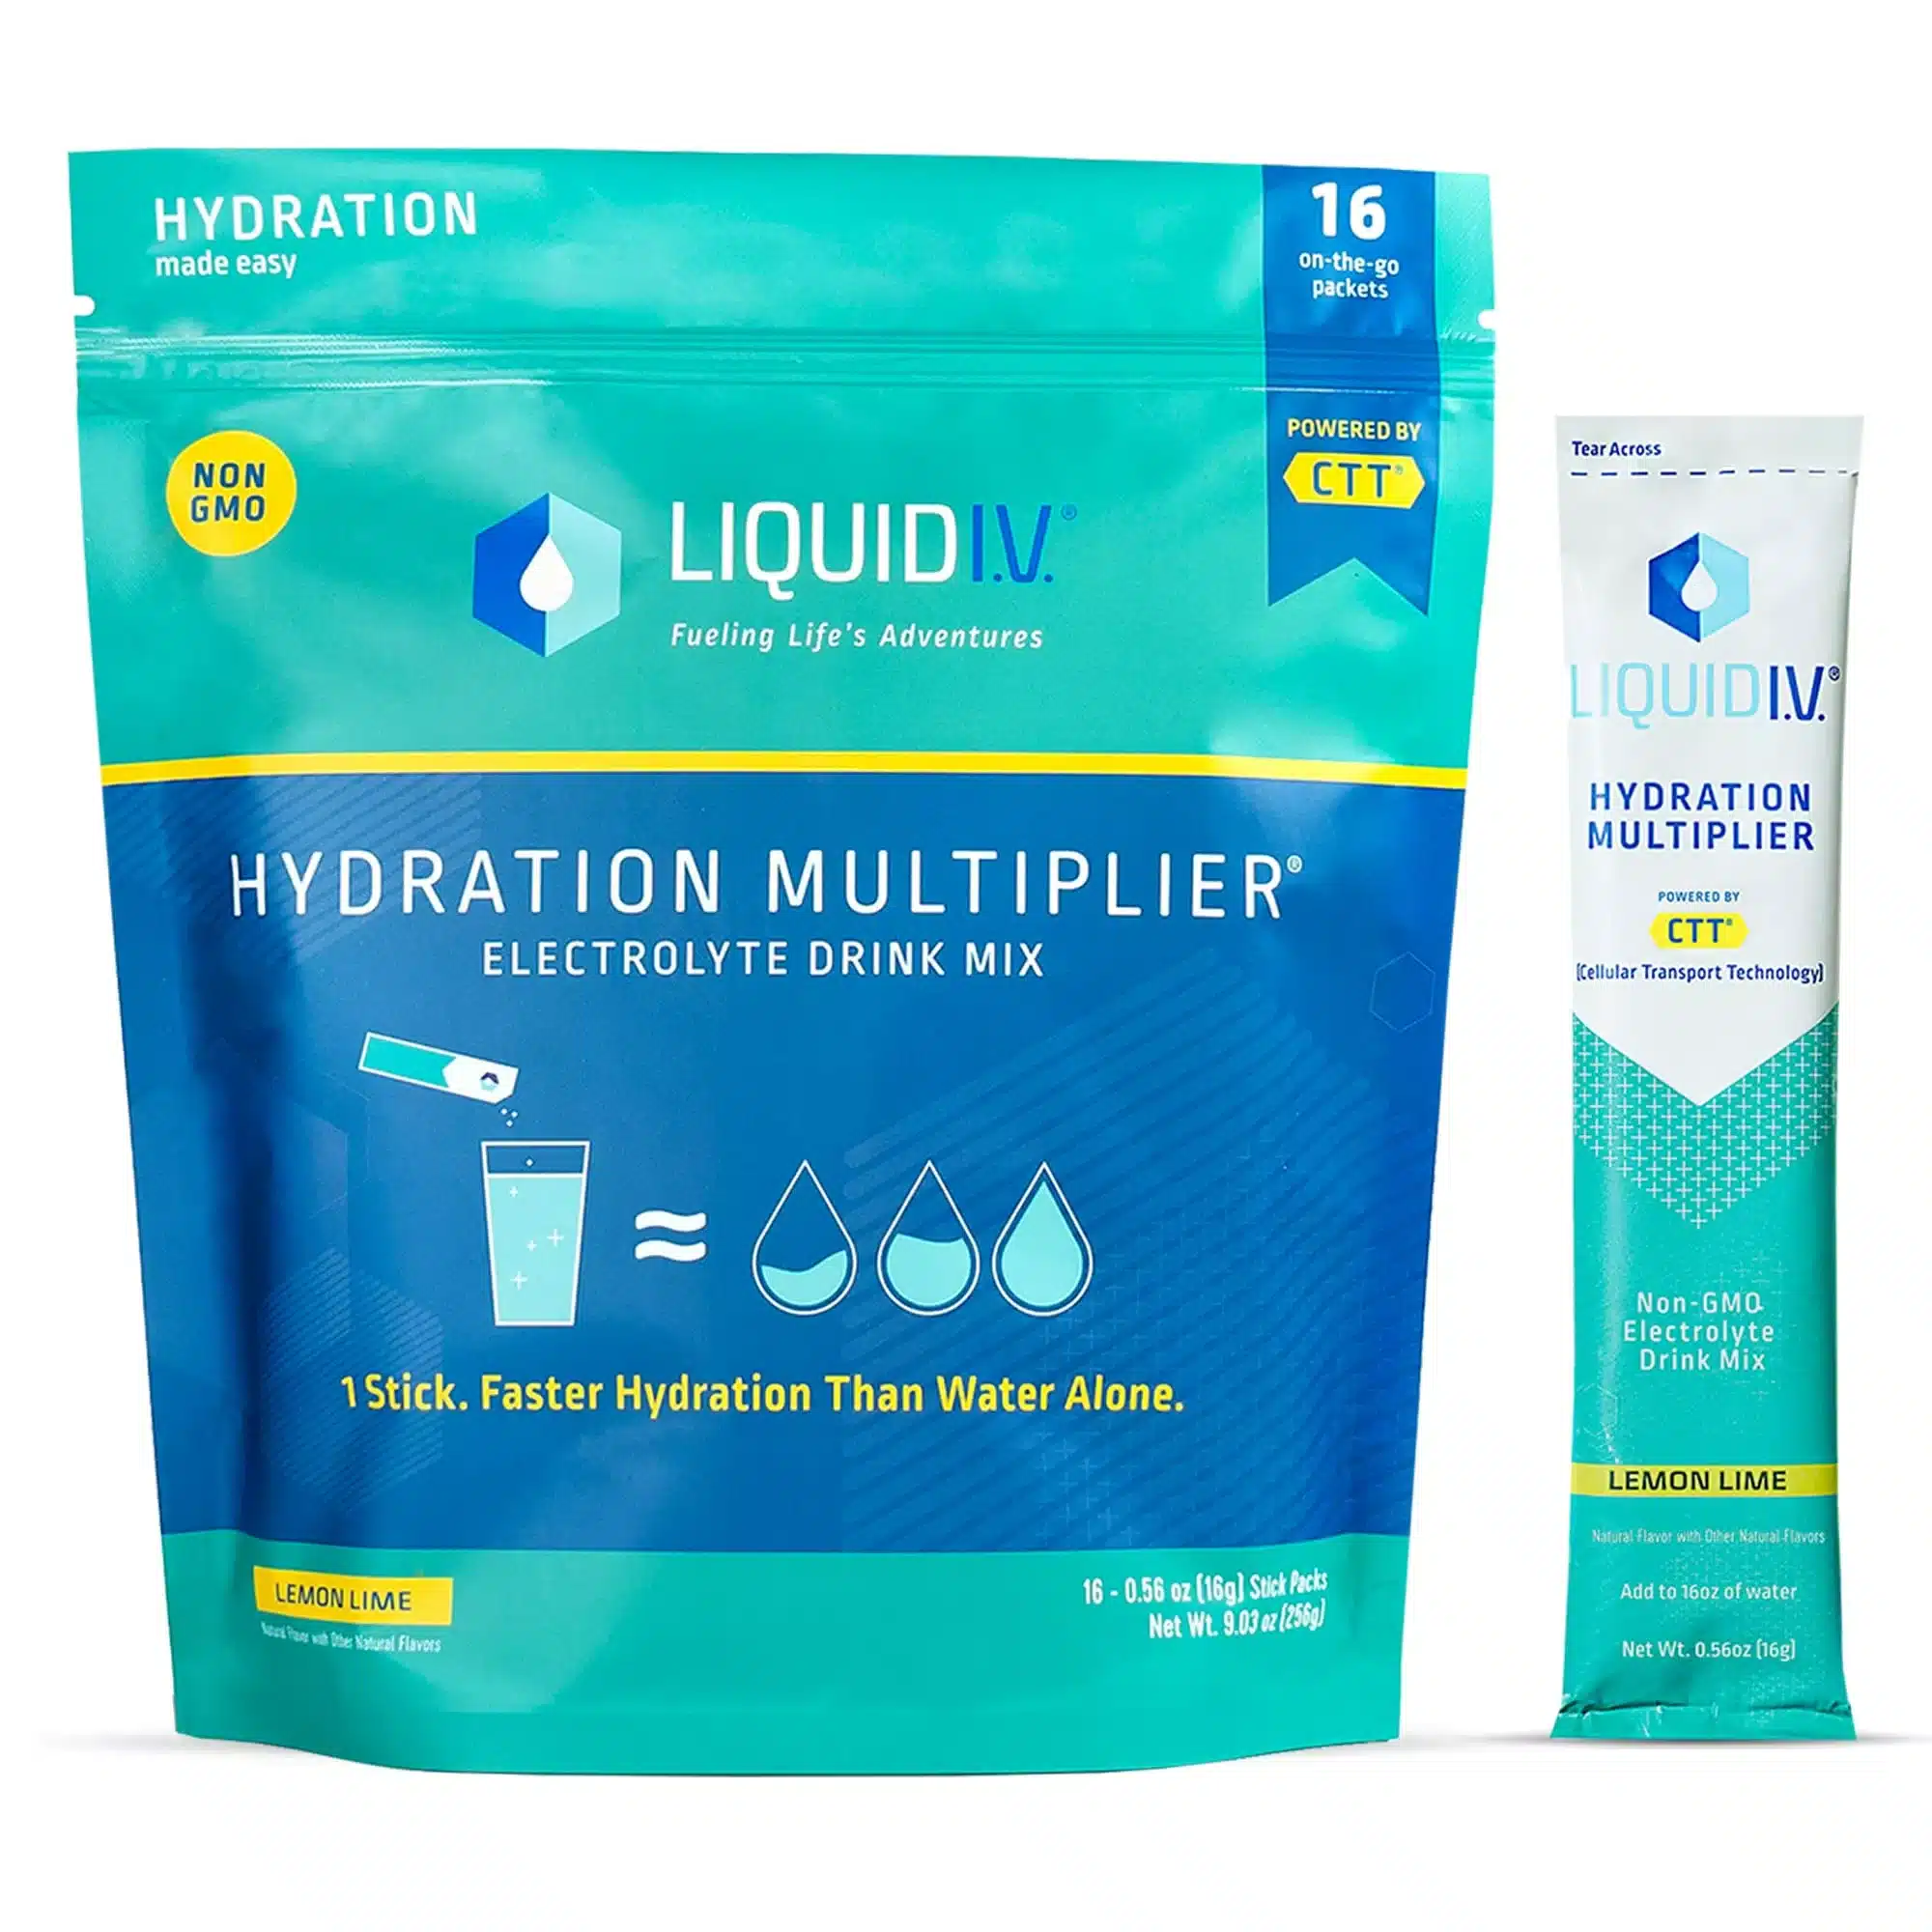 Liquid I.V. main product image